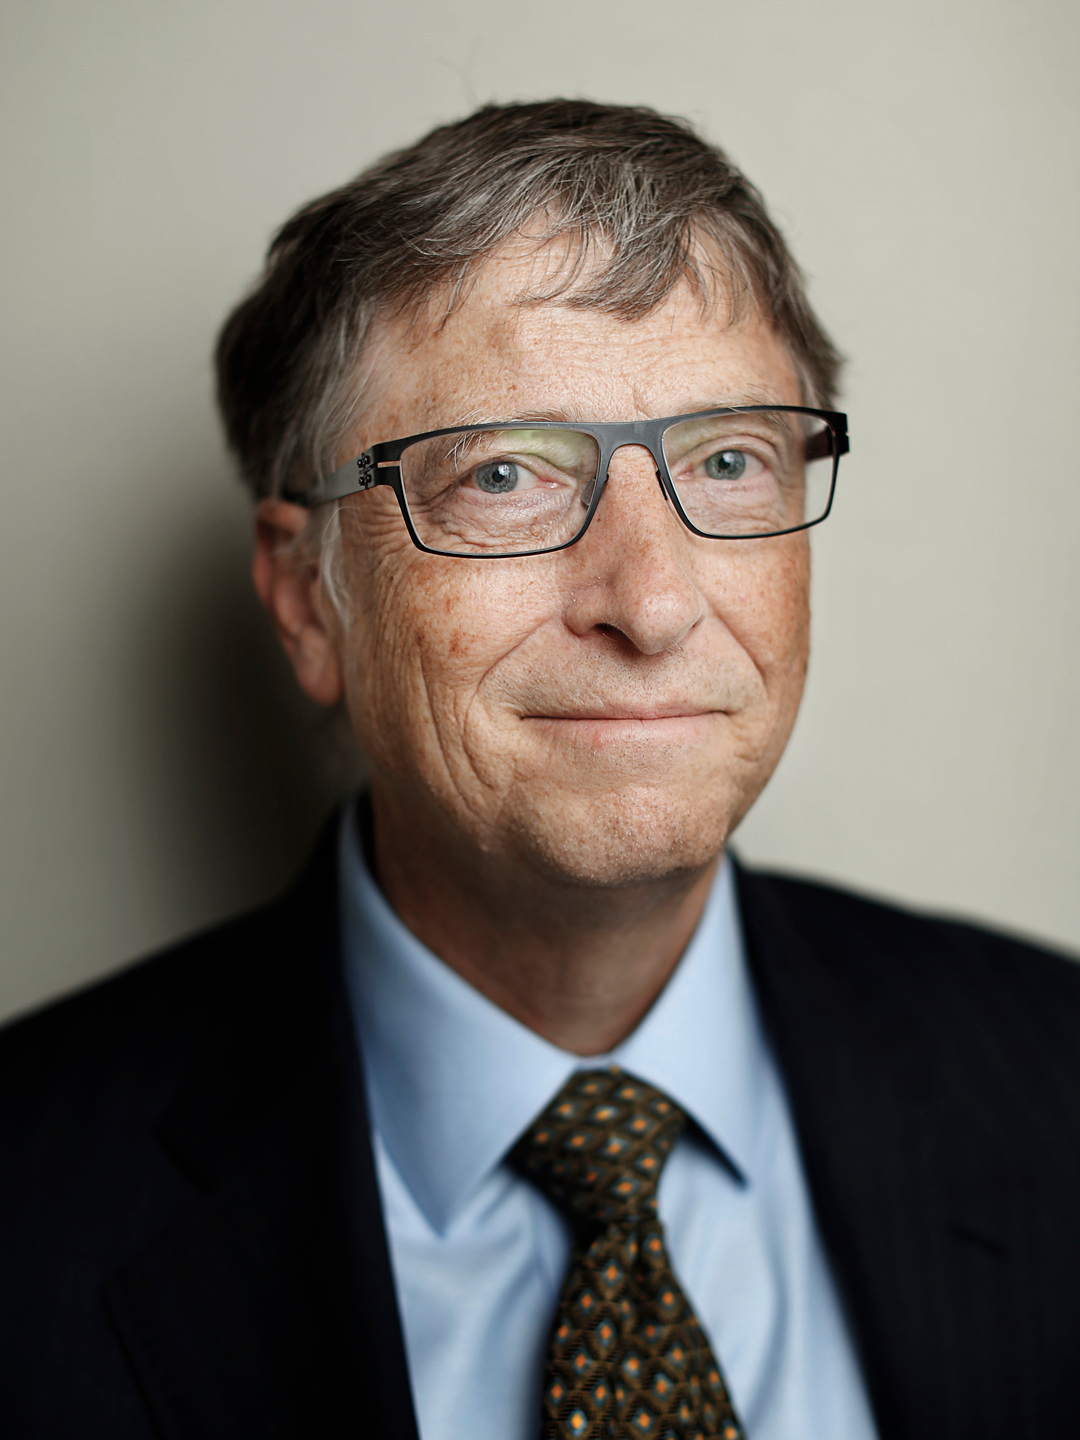 Bill Gates life path